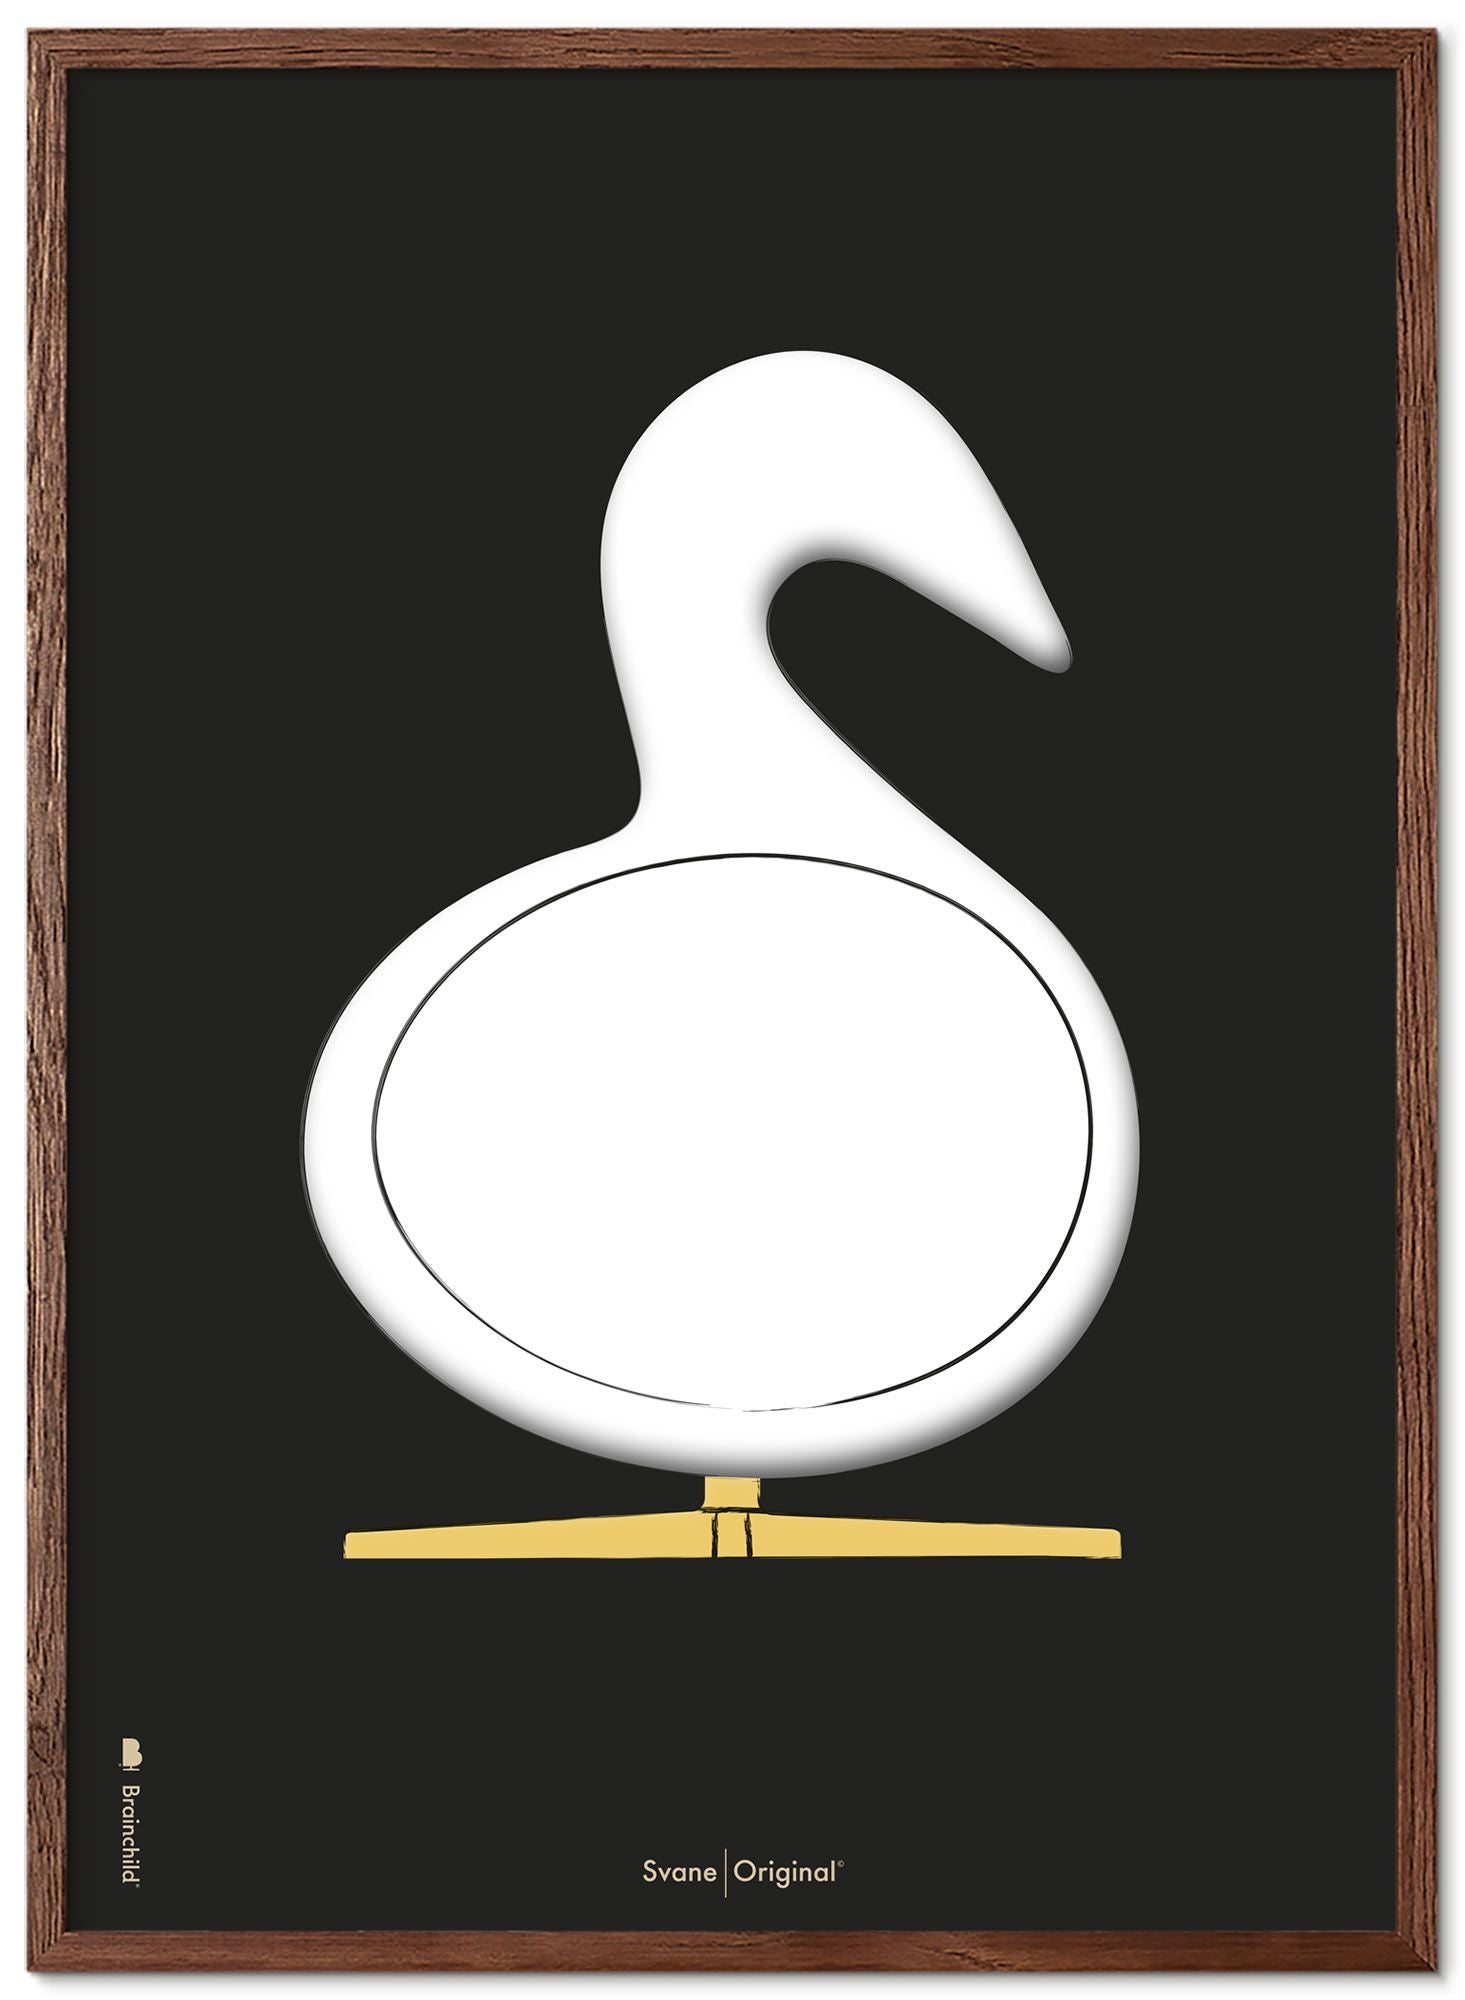 Brainchild Swan Design Sketch Poster Frame Made Of Dark Wood 70x100 Cm, Black Background